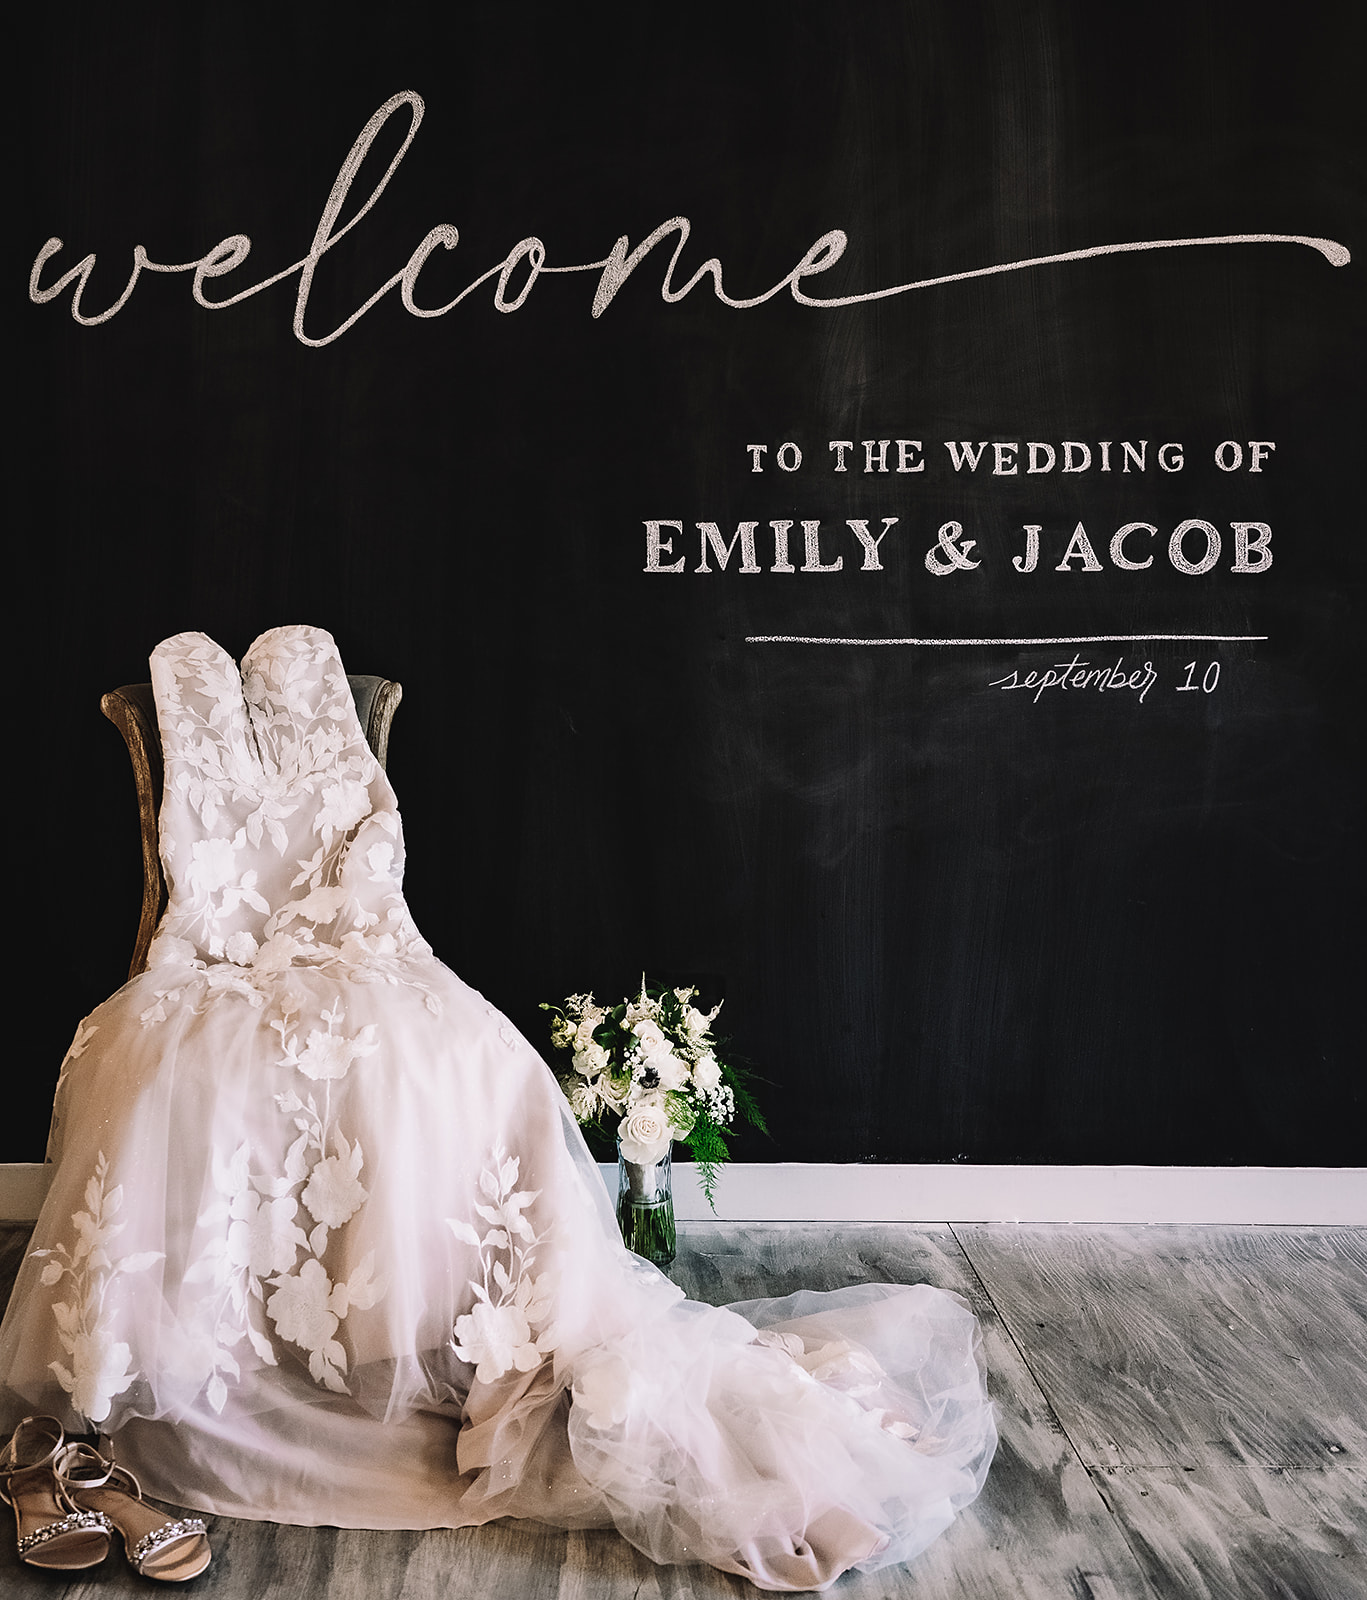 wedding dress details with chalkboard wall Brightside Music & Event Venue Dayton Ohio